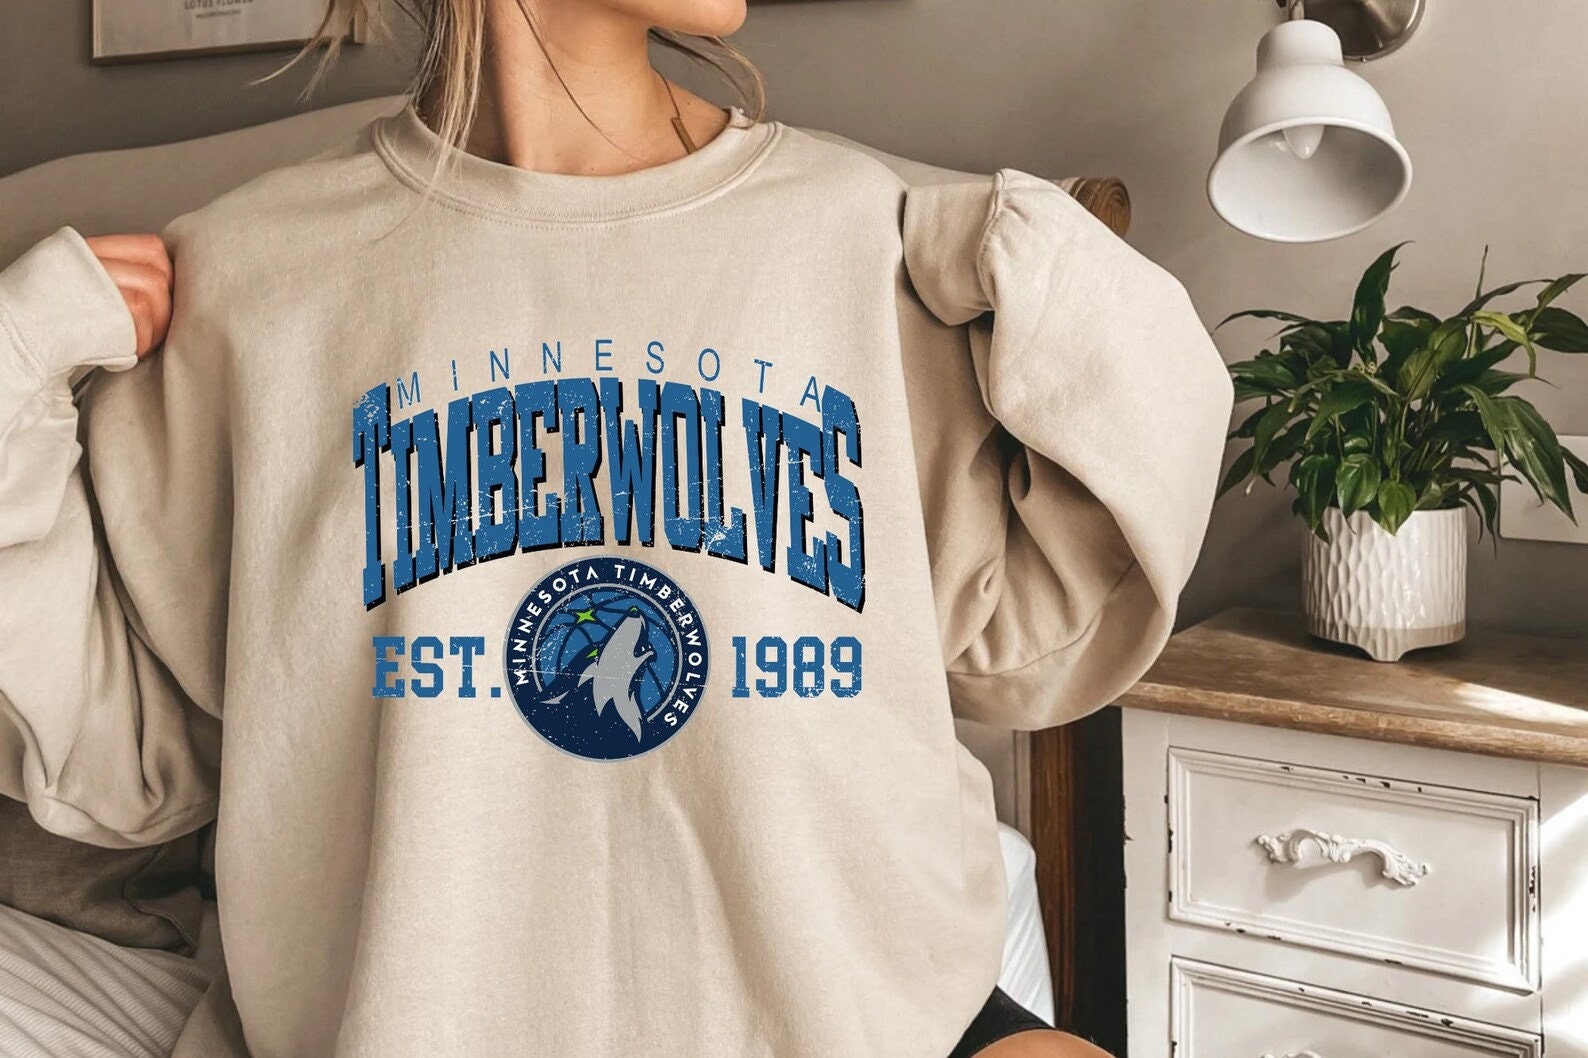 CustomCat Minnesota Timberwolves Retro NBA Tie-Dye Shirt SpiderRoyal / 2XL